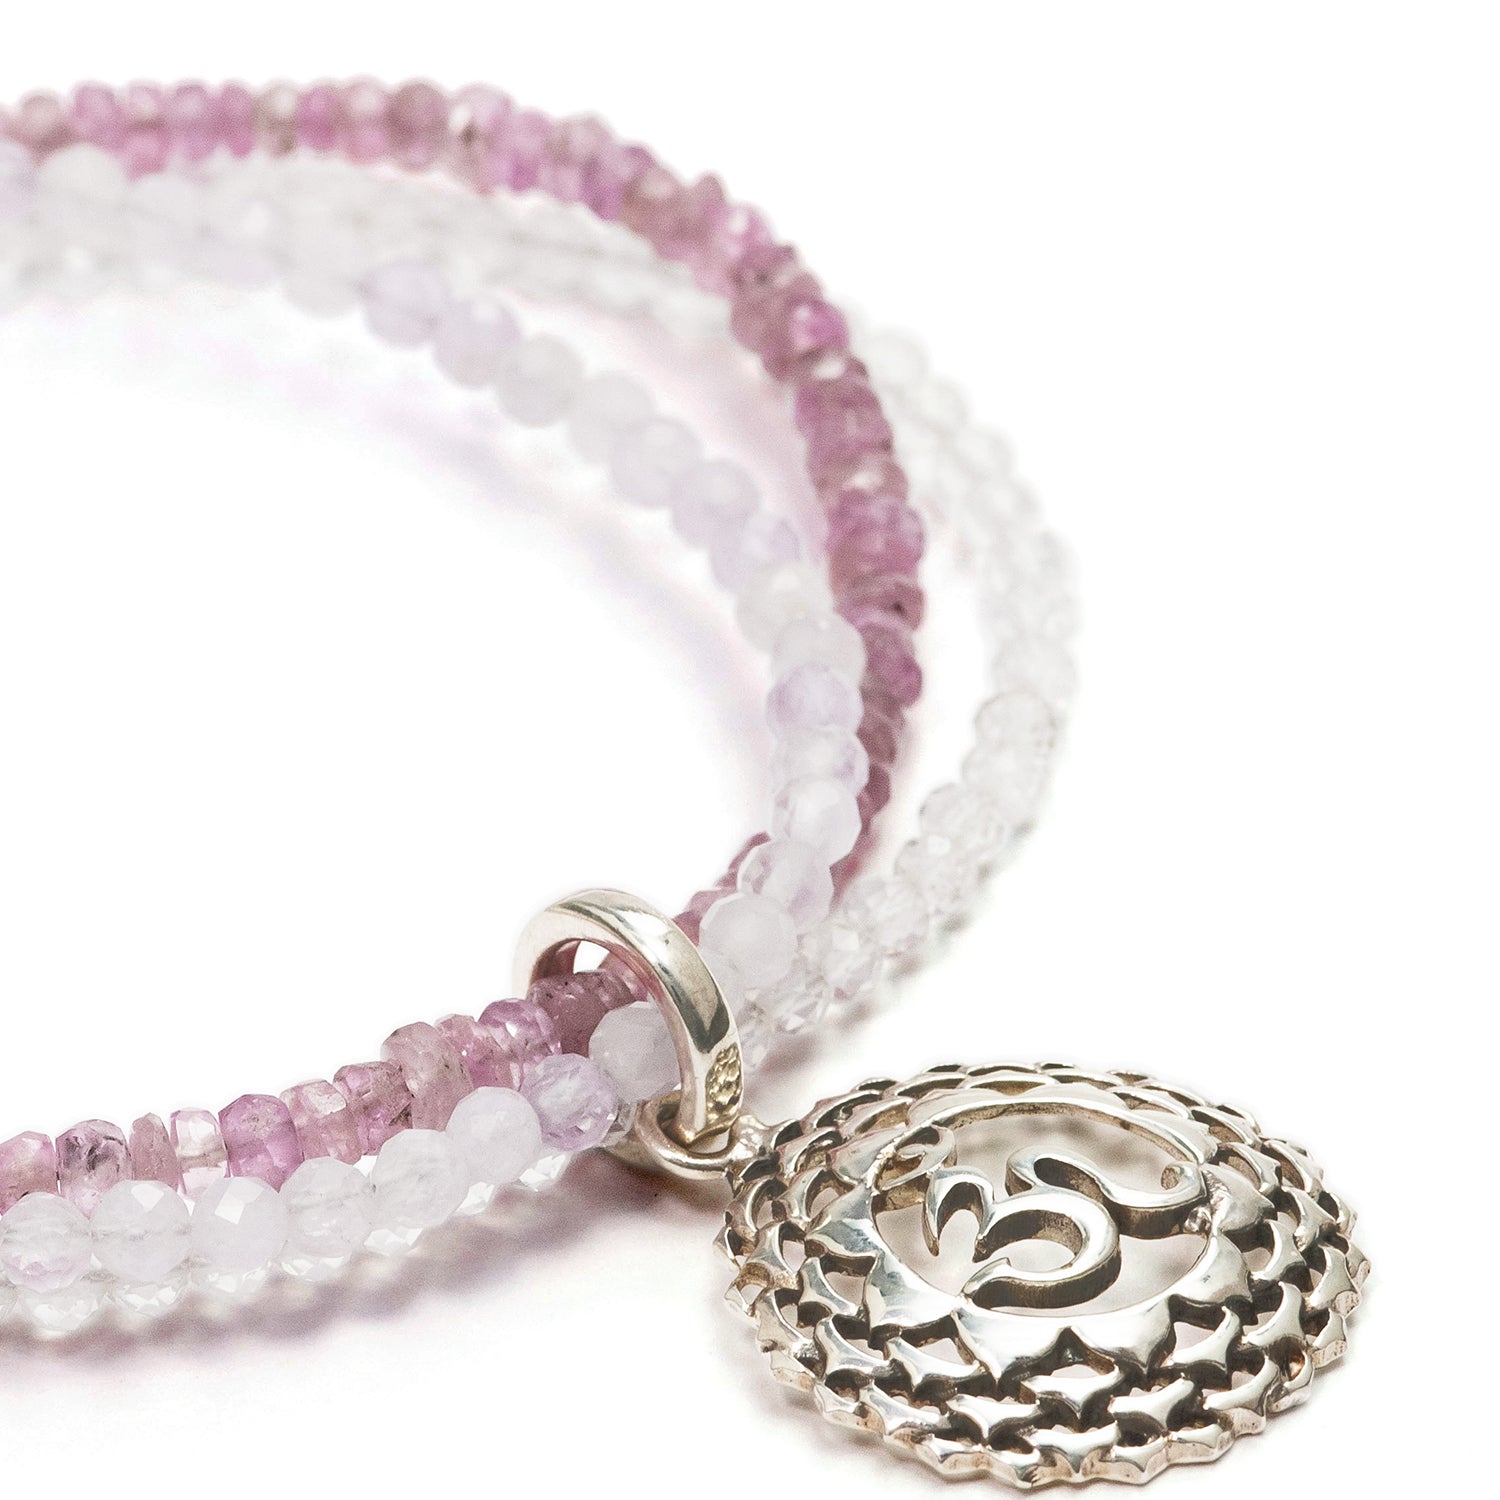 Crown Chakra bracelet with gemstones silver by ETERNAL BLISS - Spiritual Jewellery